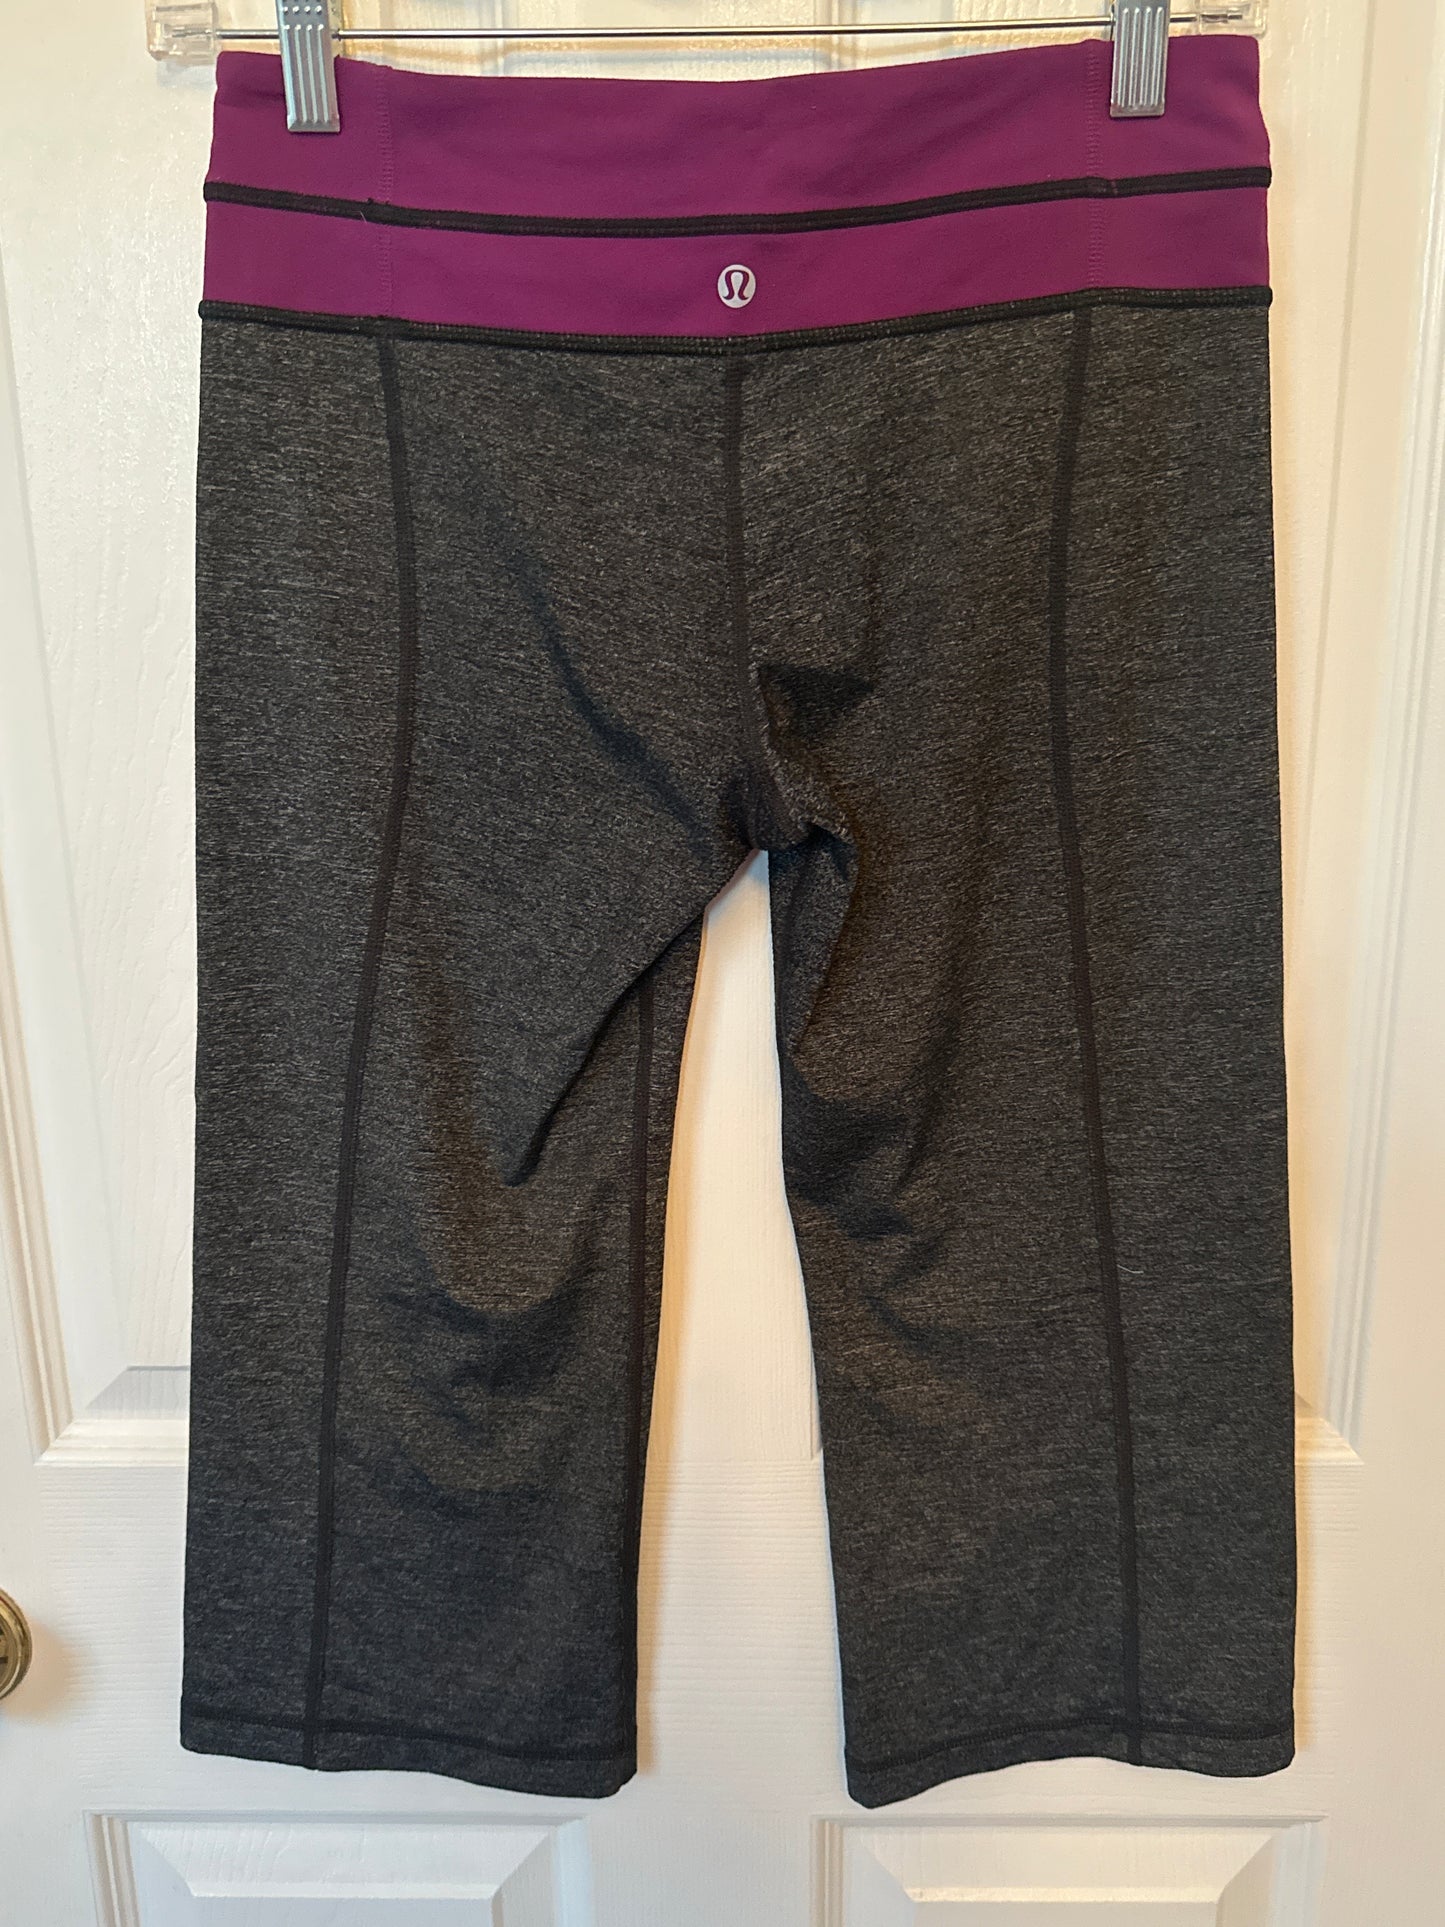 Lululemon Women’s Charcoal Gray and Purple Sz 6 Cropped Capri Pants Leggings